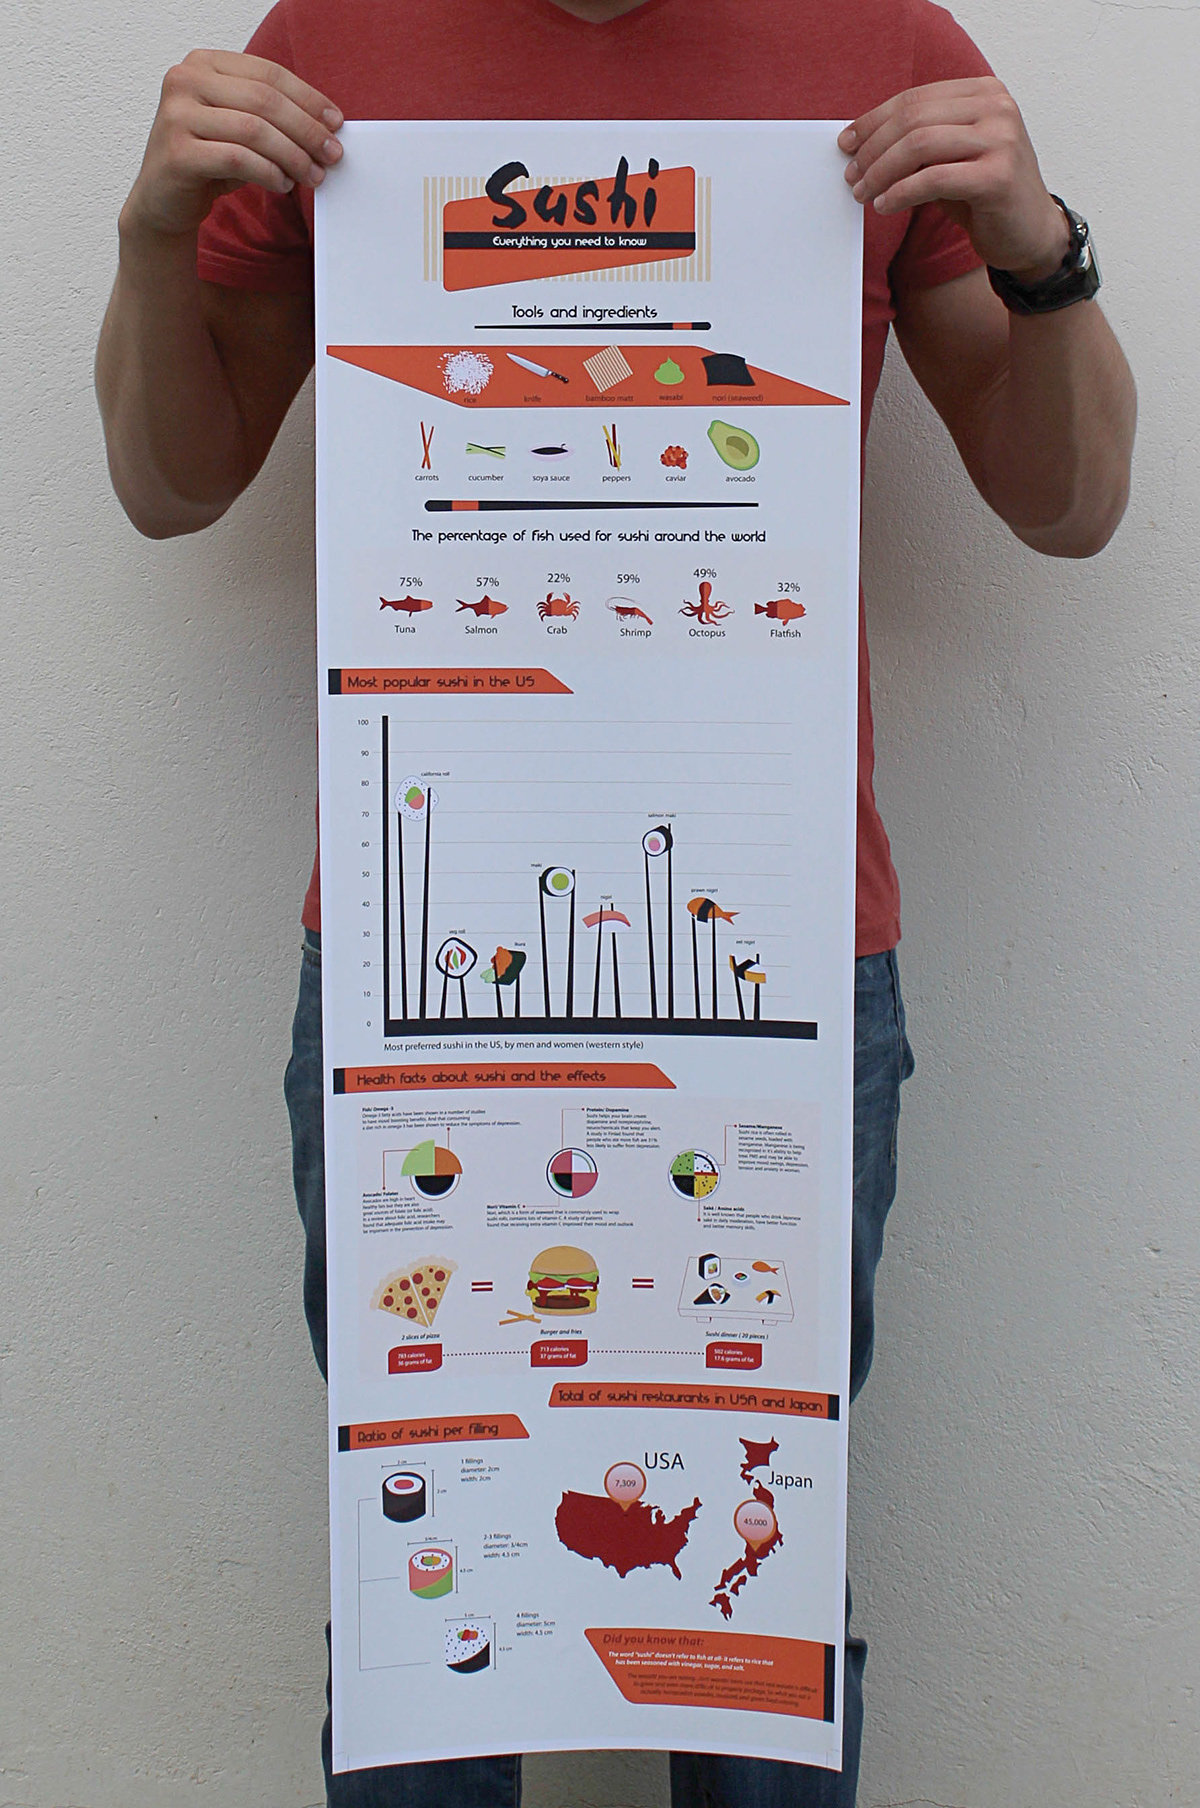 Sushi drawings & statistics